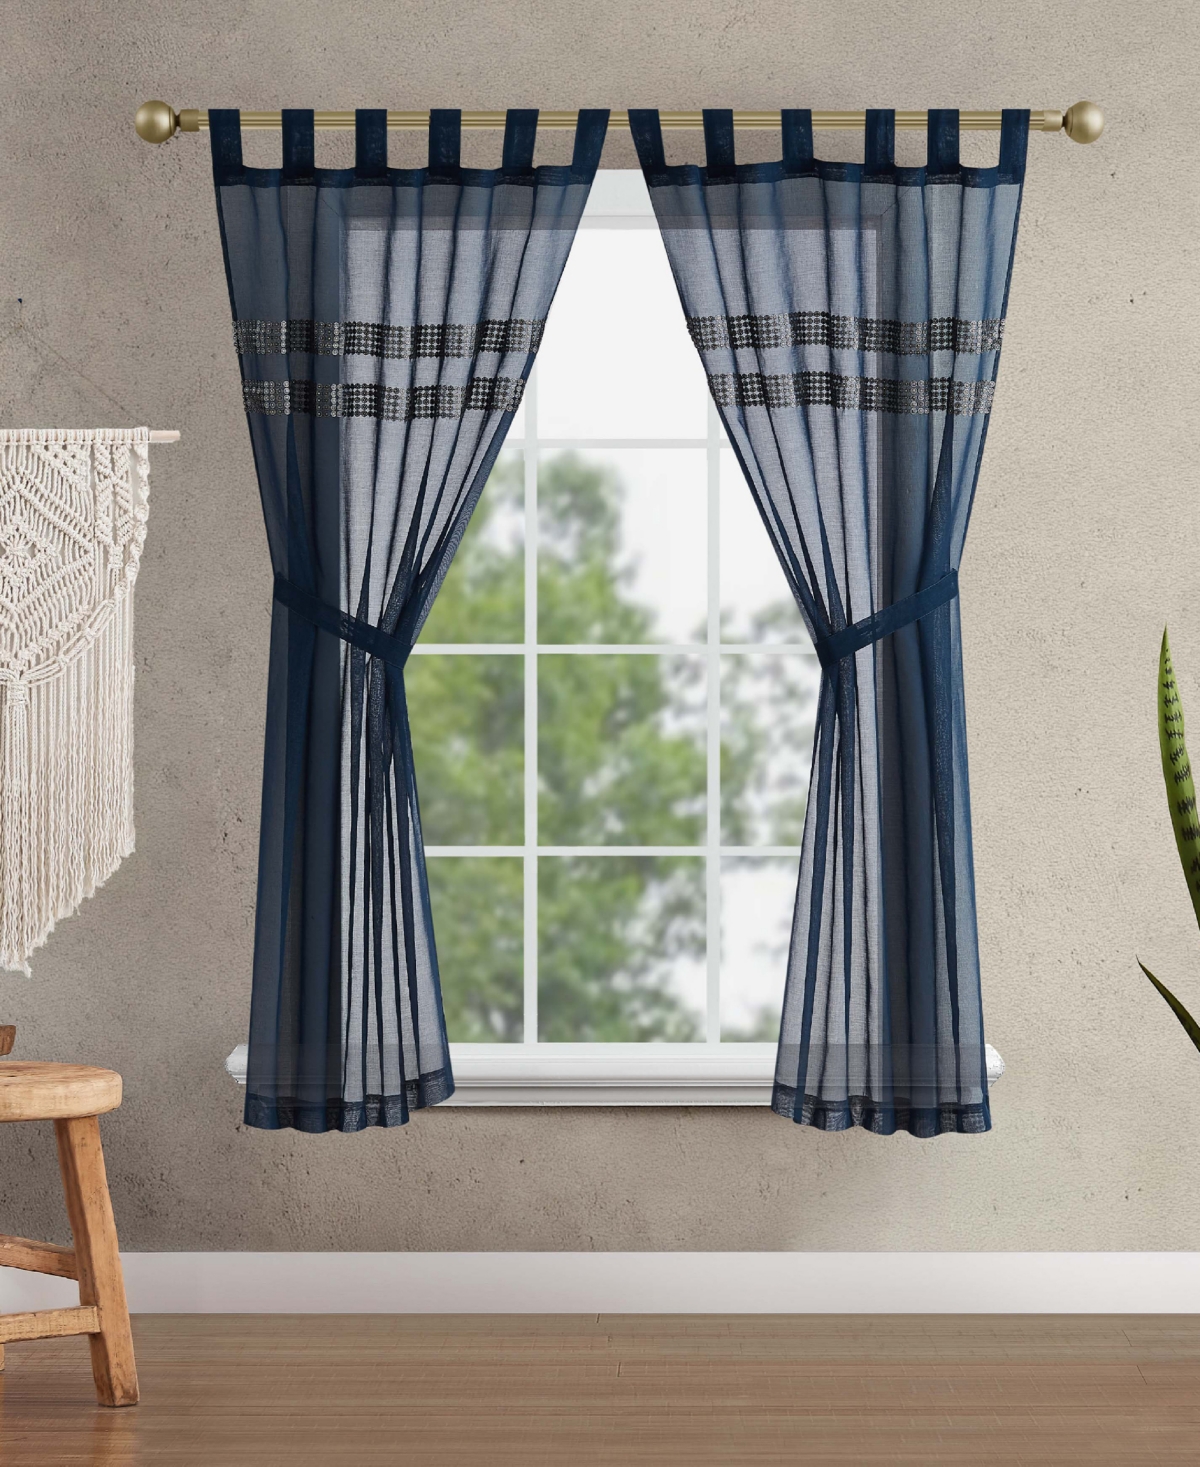 Jessica Simpson Milly Bling Sheer Tab Top Window Curtain Panel Pair With Tiebacks, 38" X 63" In Indigo Blue